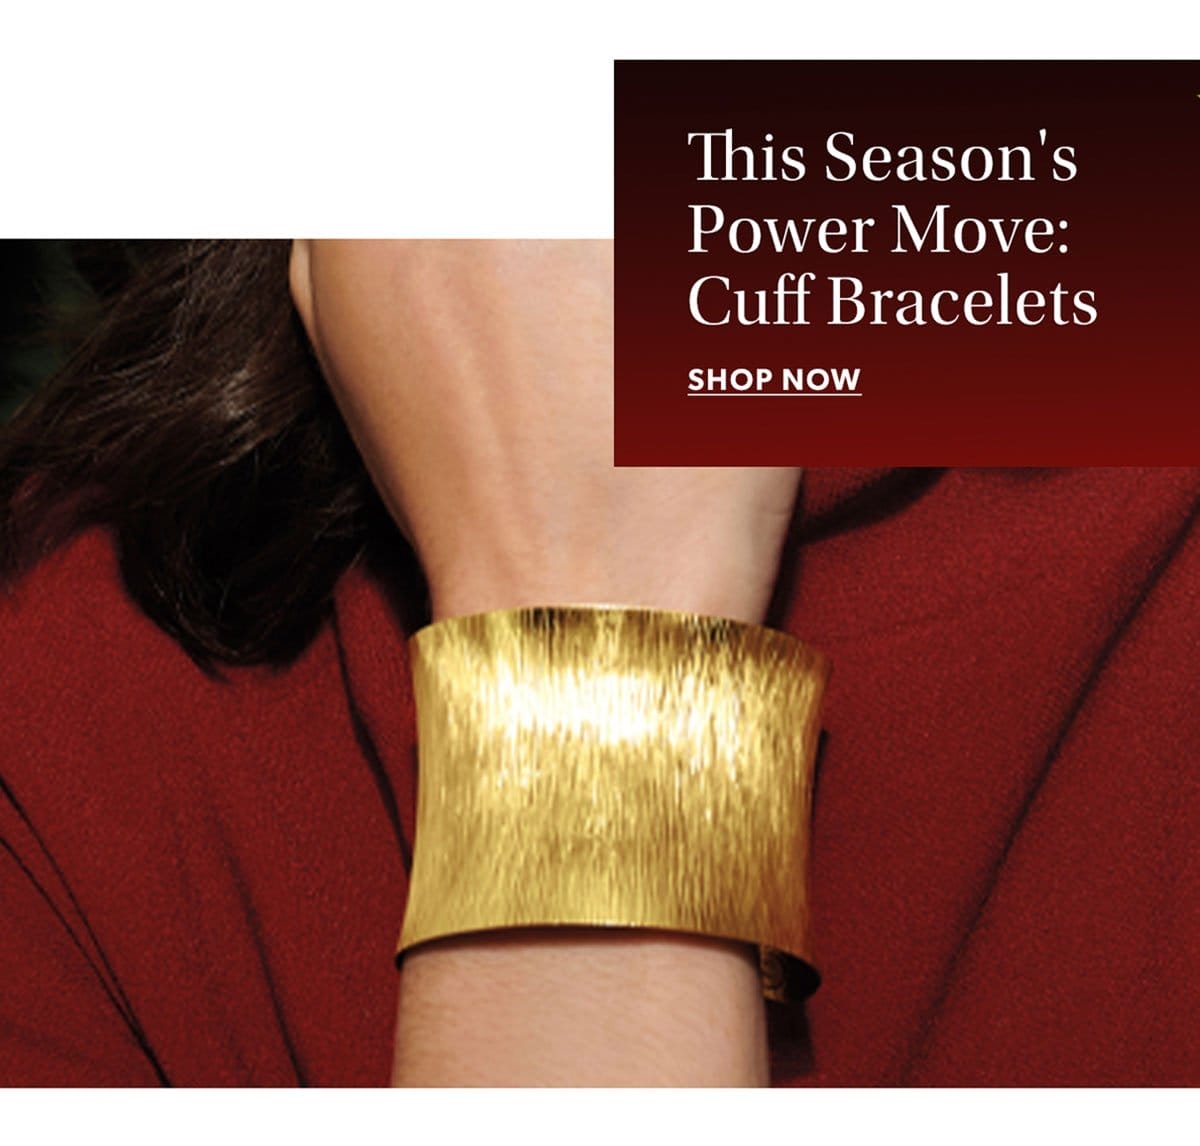 This Season's Power Move: Cuff Bracelets. Shop Now